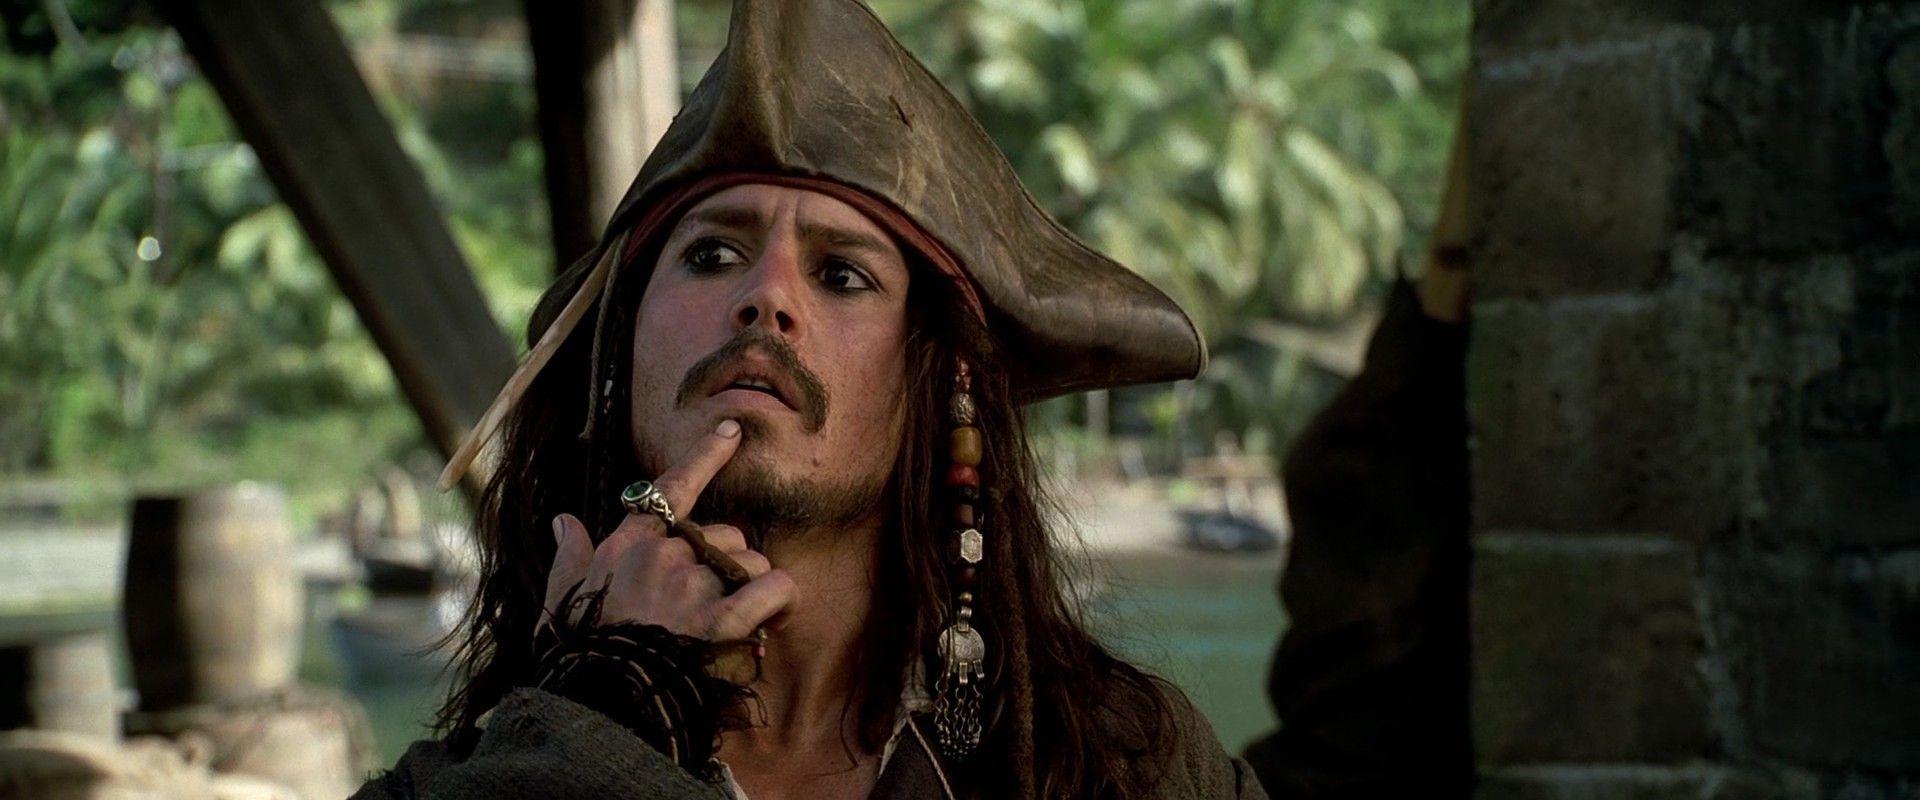 Johnny Depp Or Captain Jack Sparrow? Actor's Bizarre Speech Lights